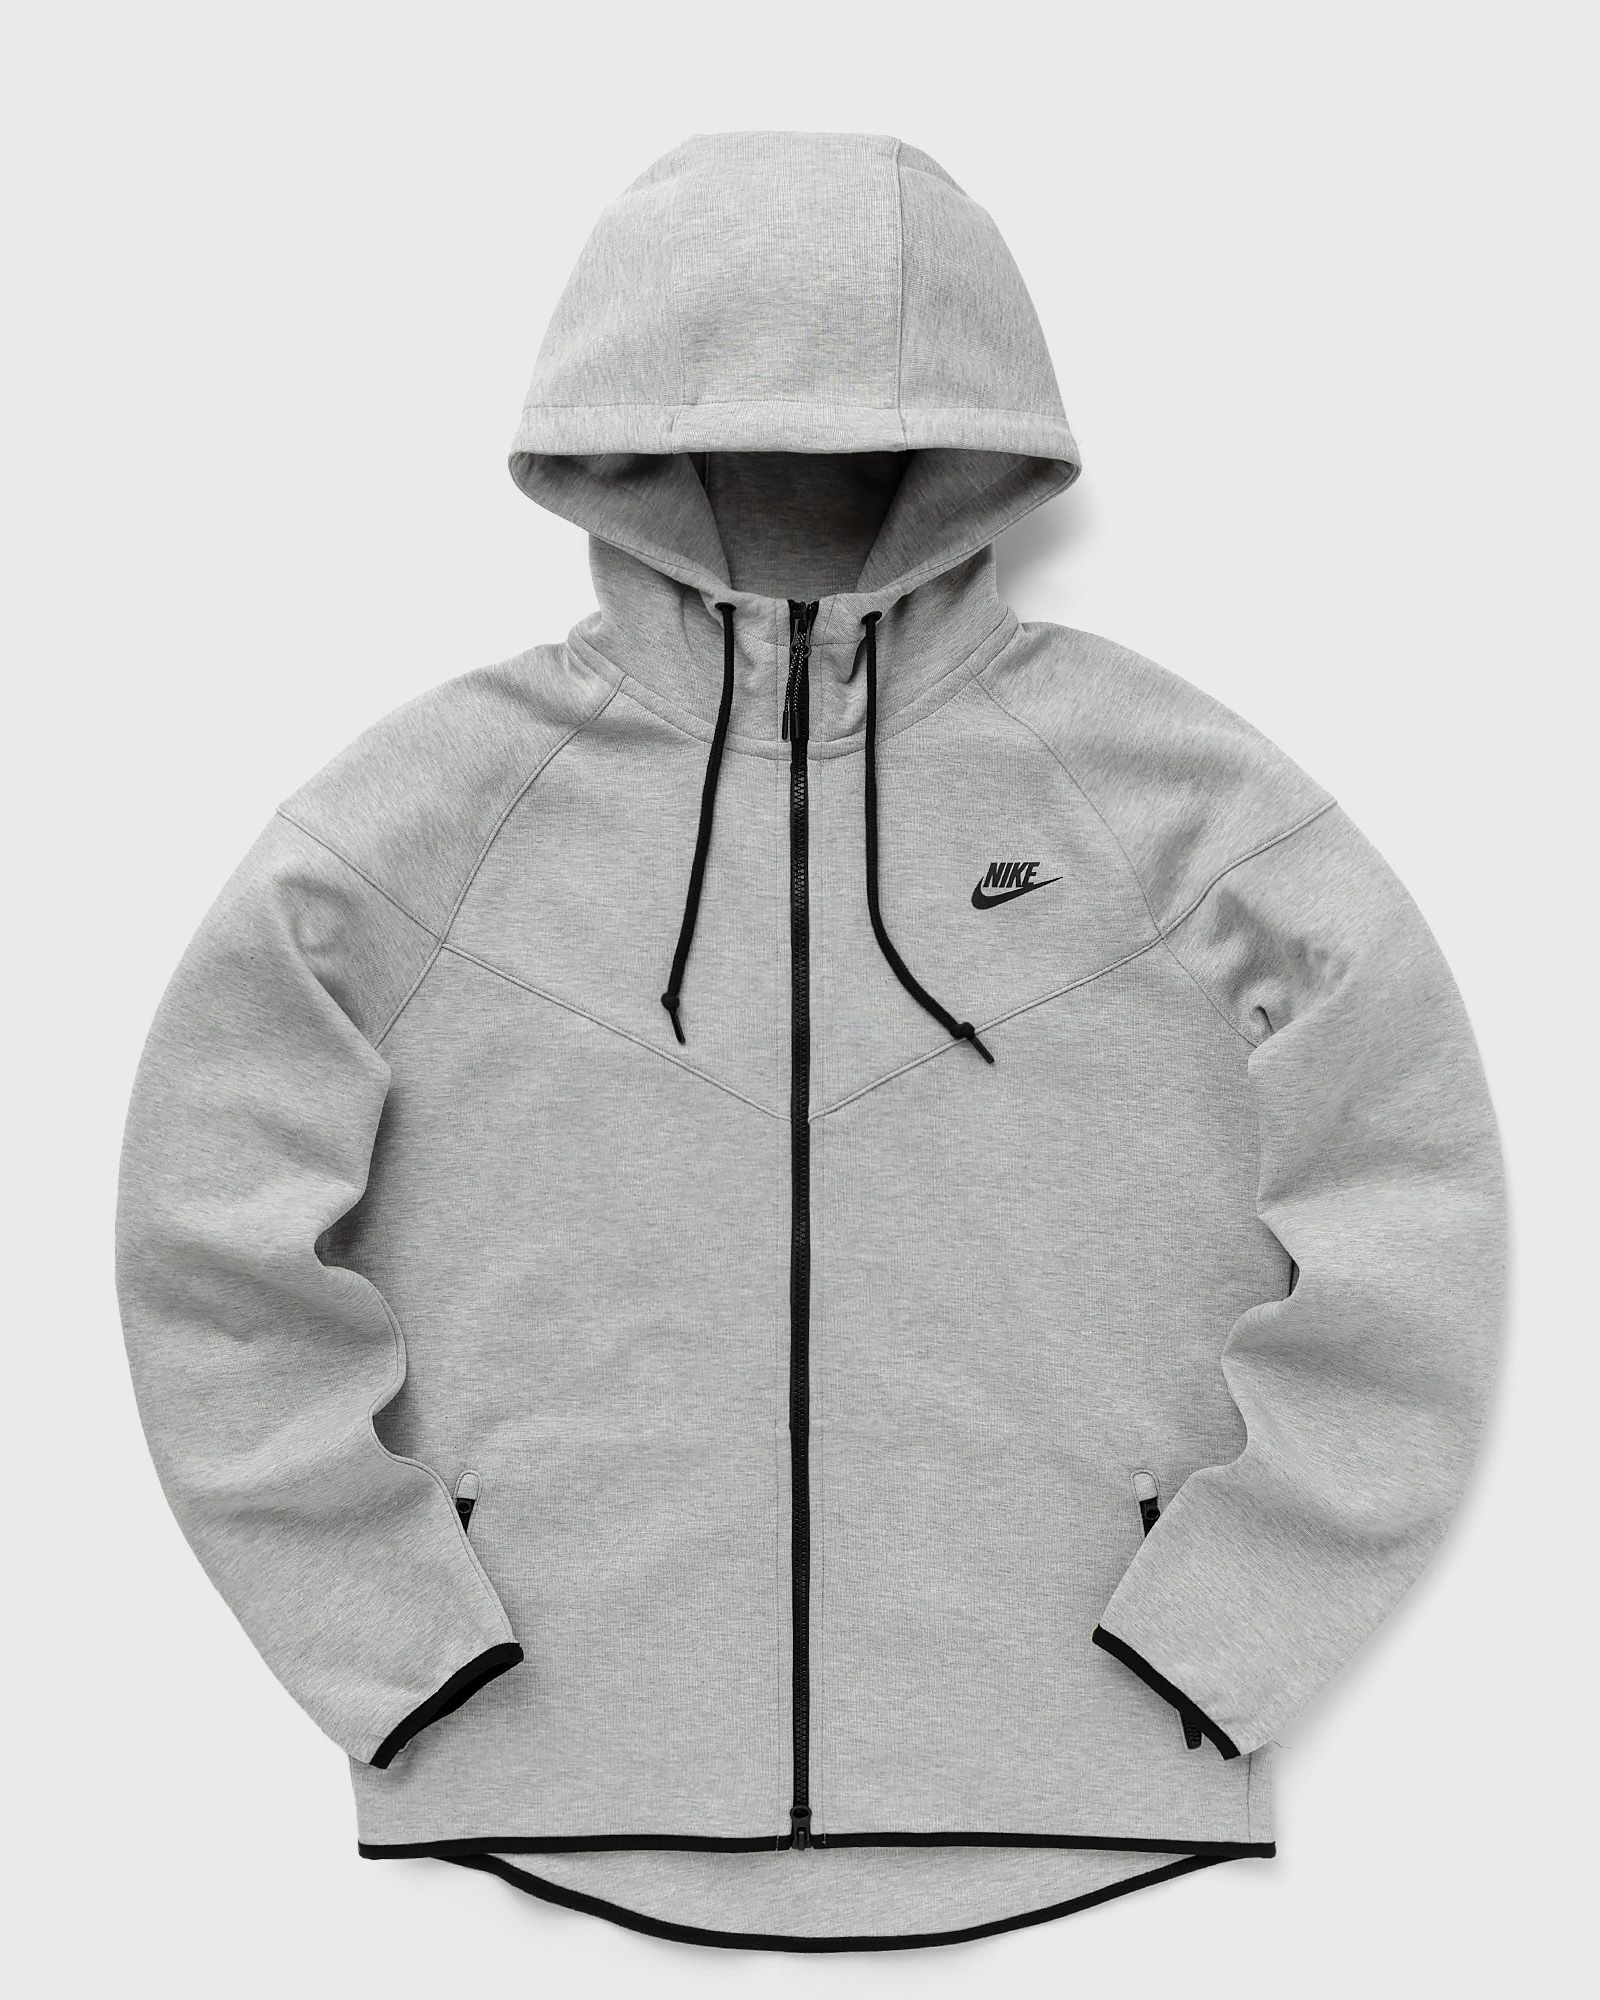 Nike - tech fleece og men hoodies|zippers grey in größe:xl